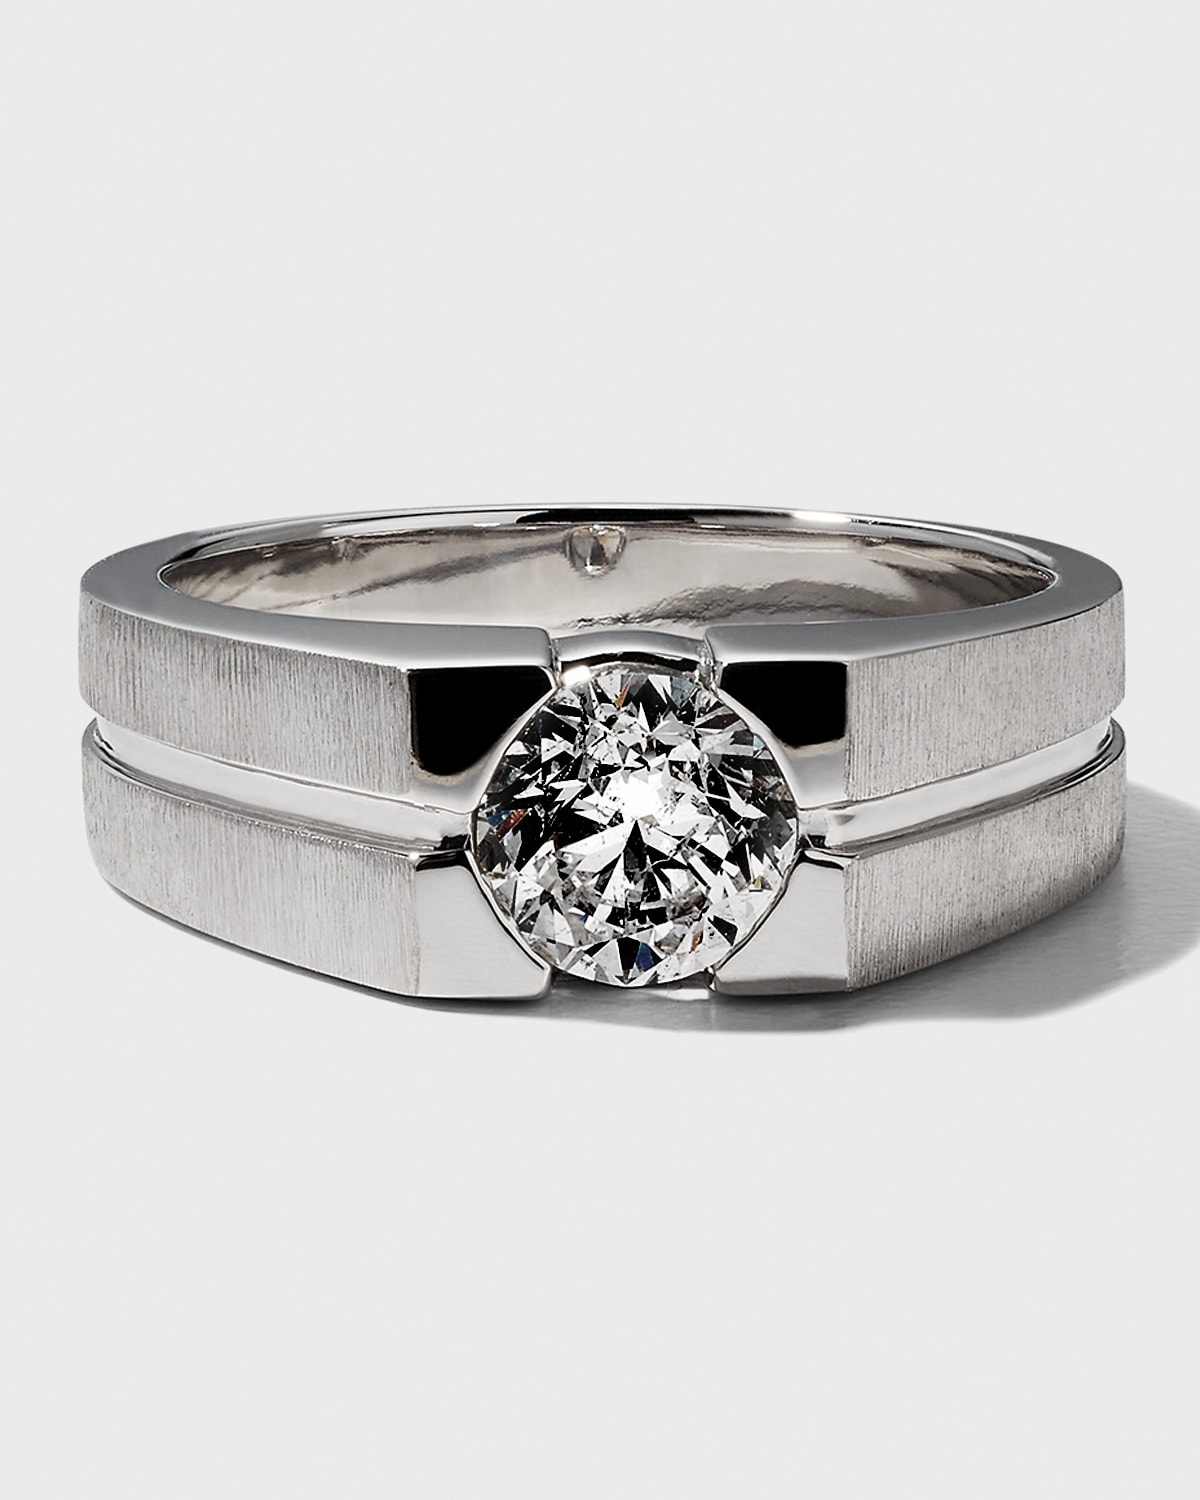 NM Diamond Collection Men's 18k White Gold Round Diamond Solitaire Ring, Size 9.5